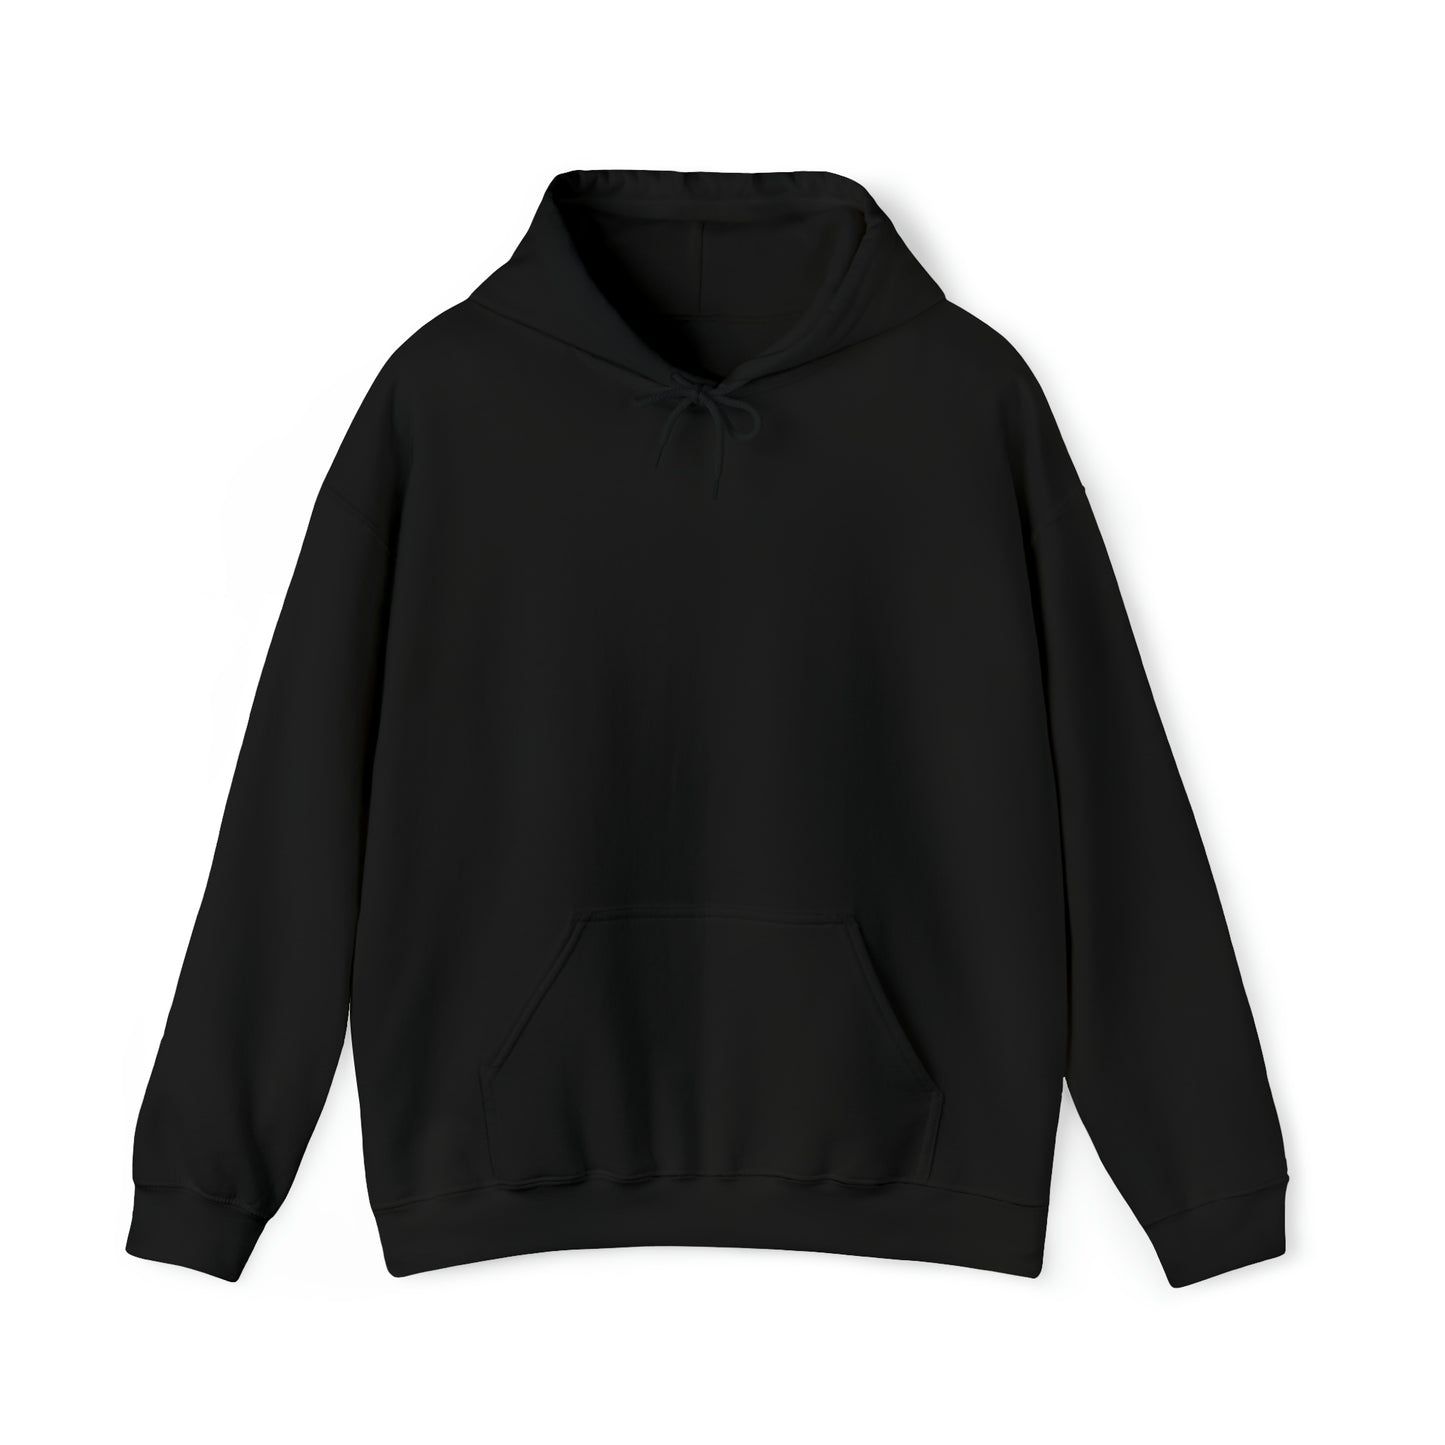 Inhale Calm, Exhale Chaos Unisex Heavy Blend™ Hooded Sweatshirt